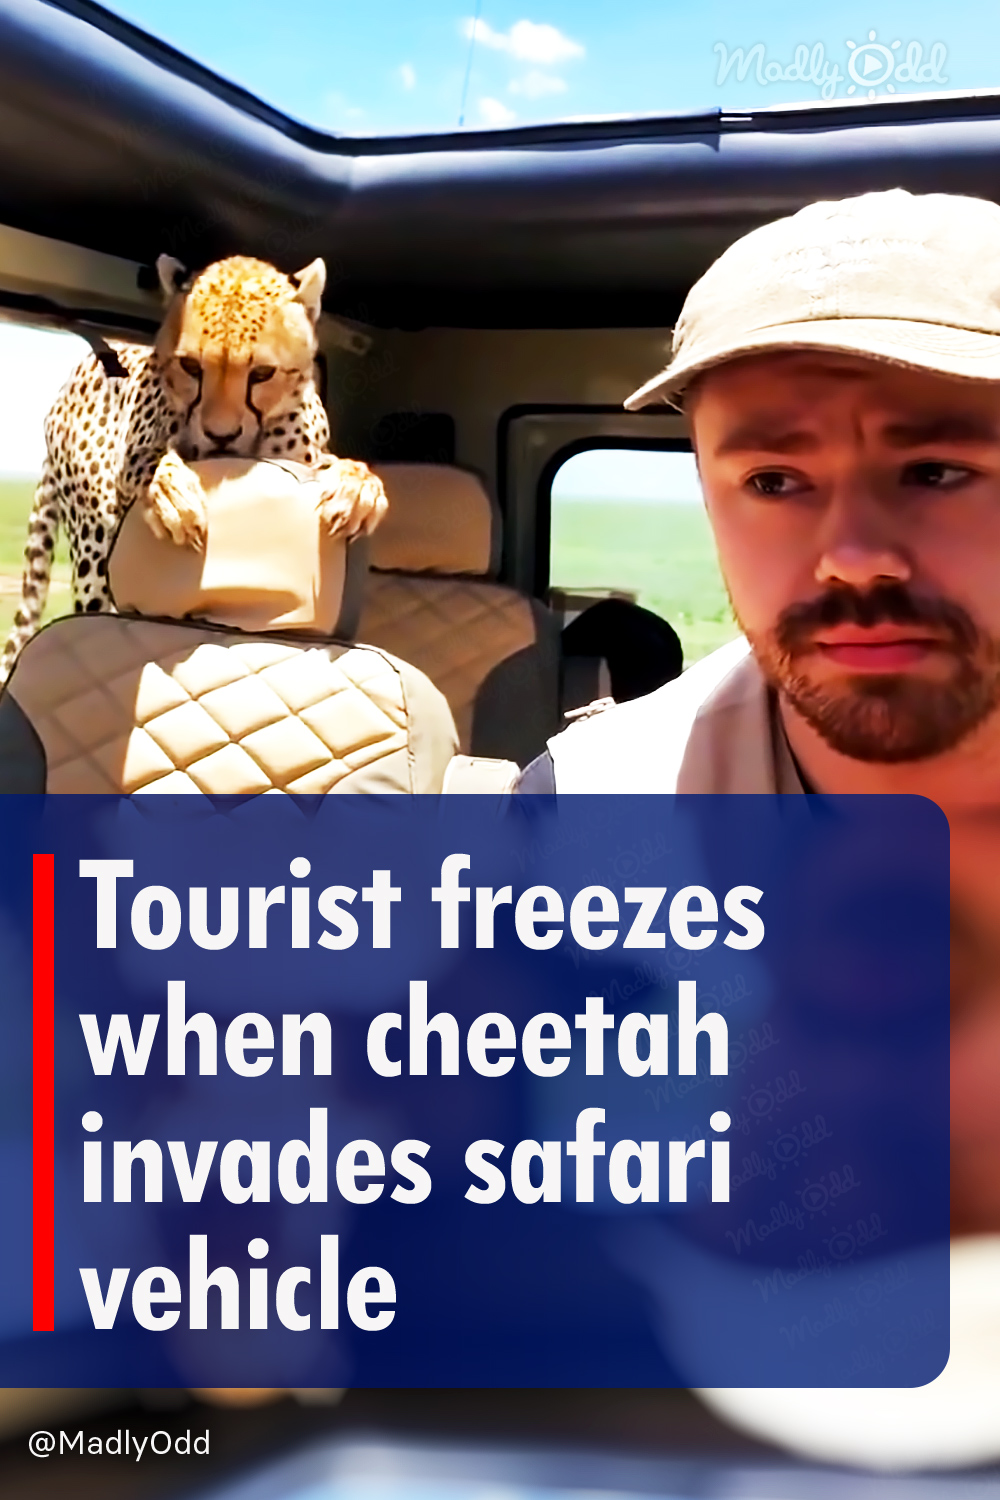 Tourist freezes when cheetah invades safari vehicle